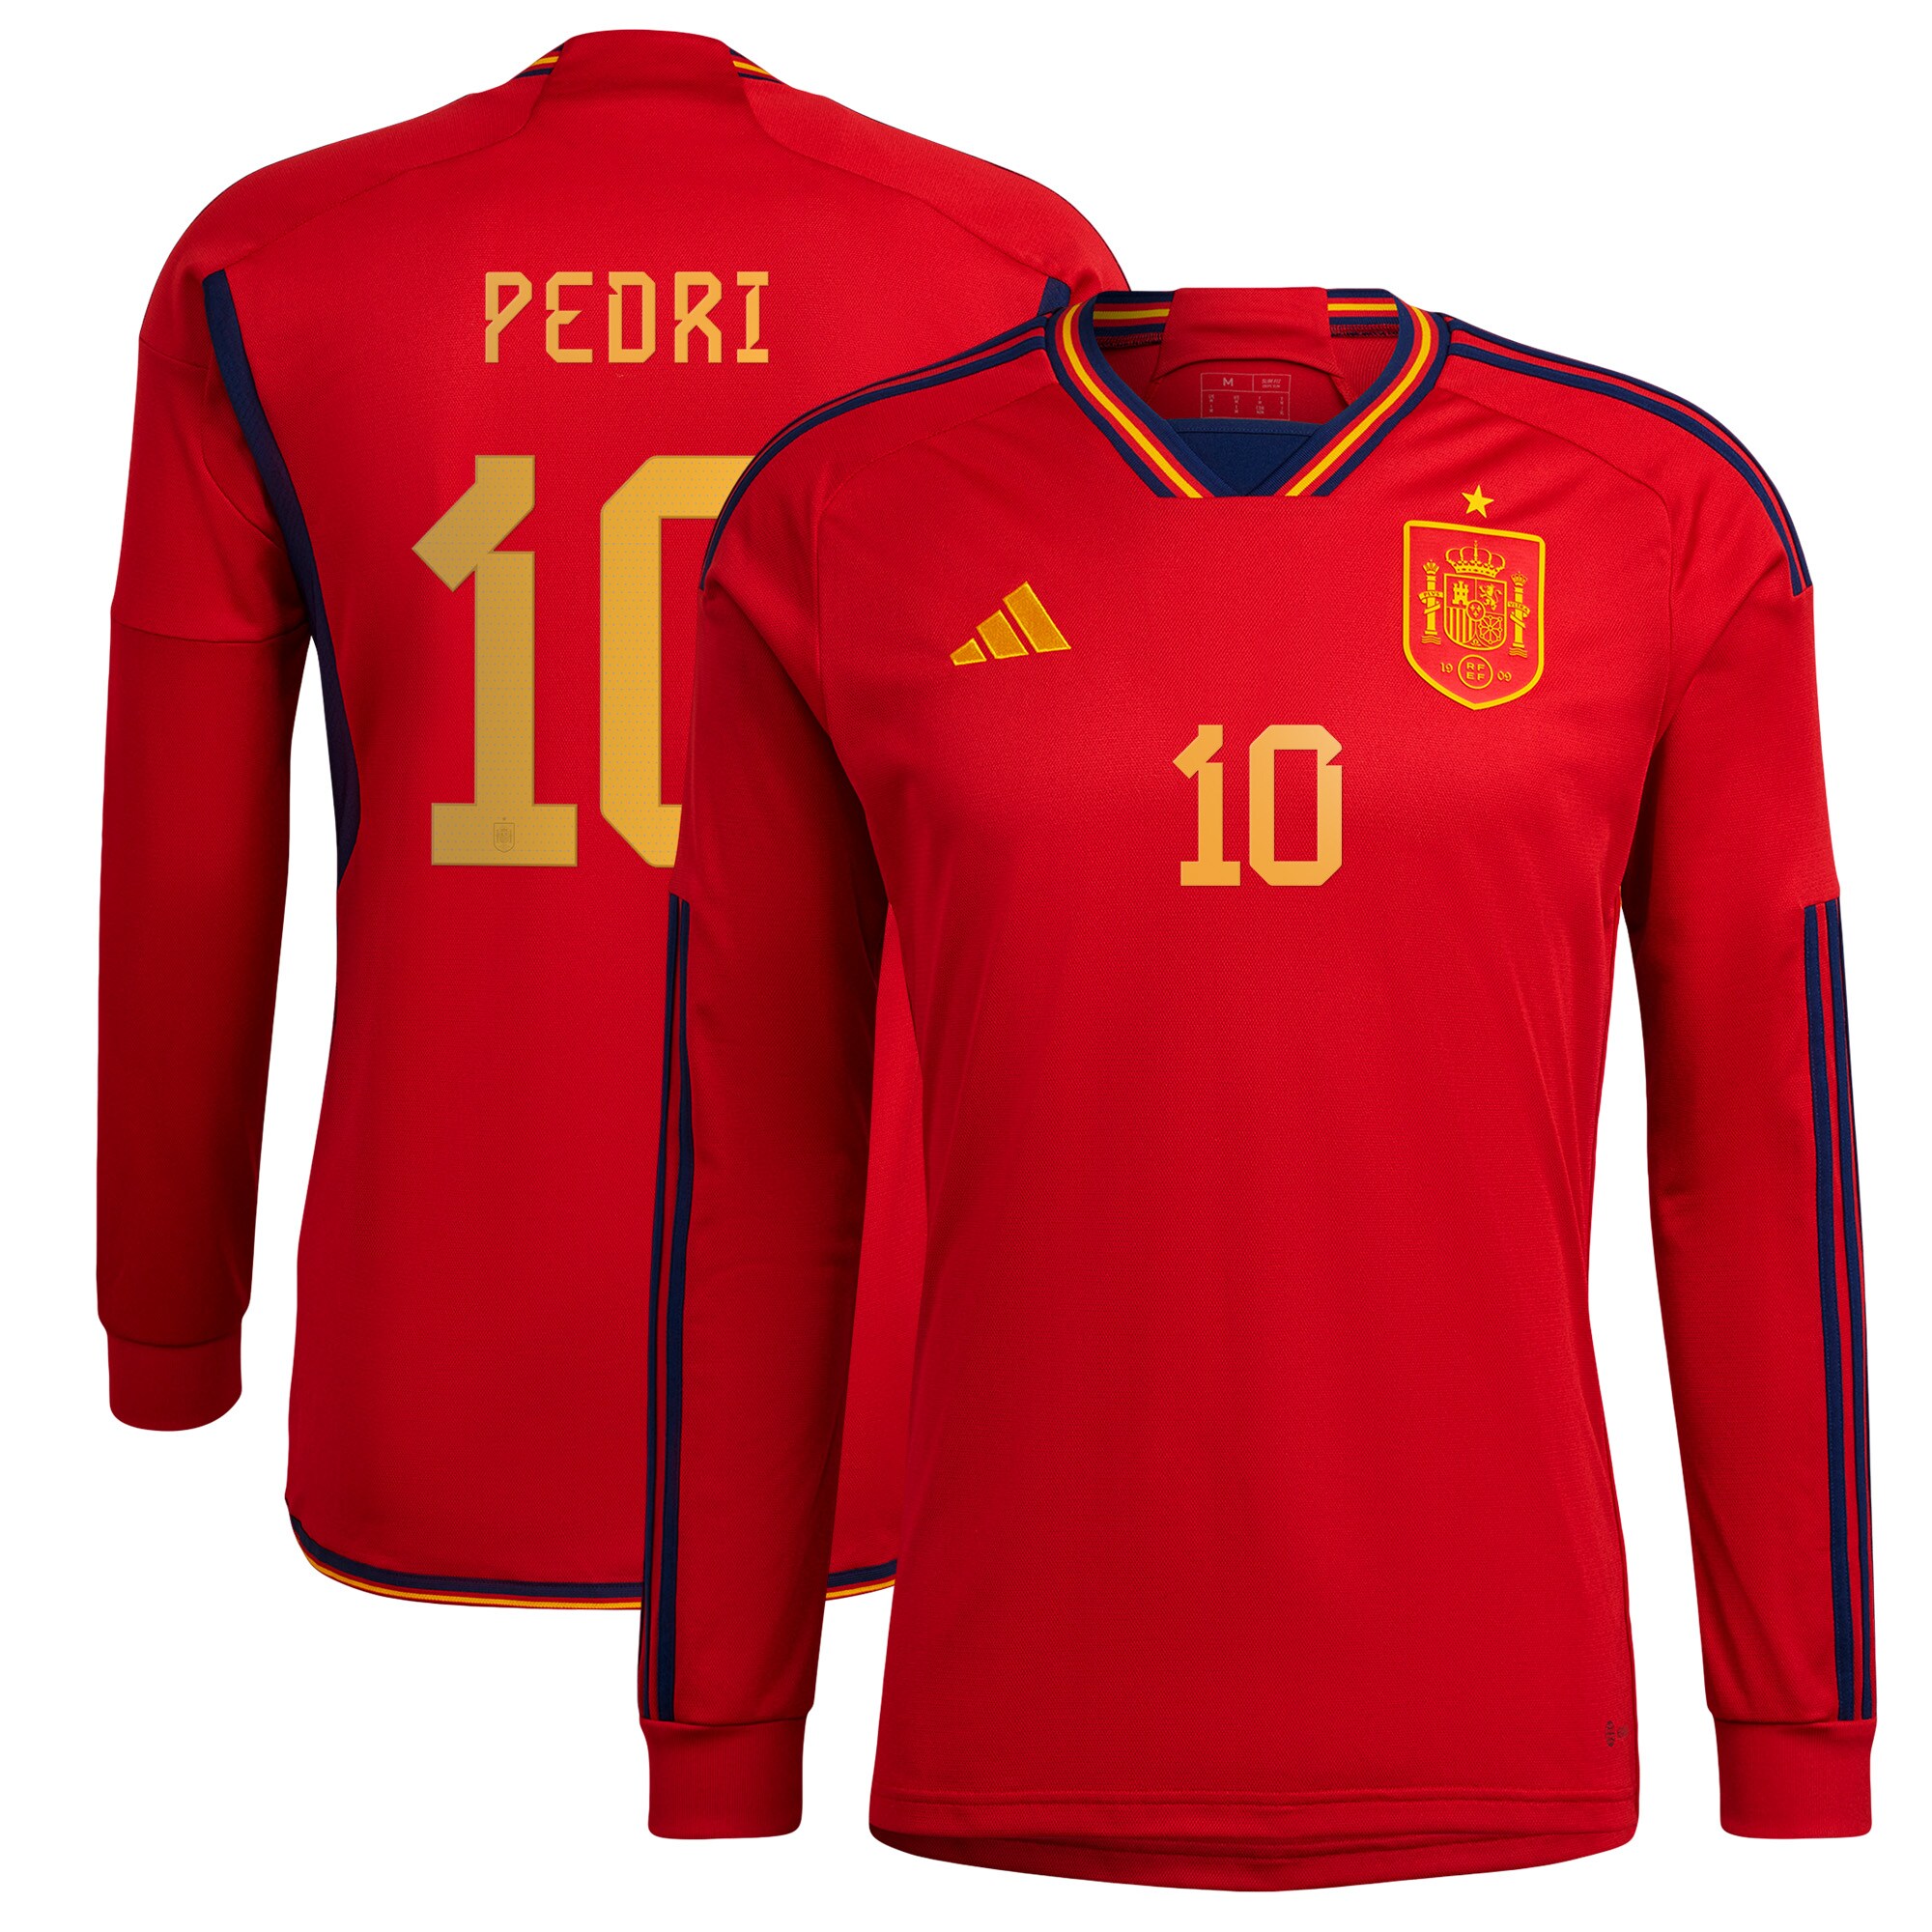 Pedri Spain National Team 2022/23 Home Long Sleeve Player Jersey